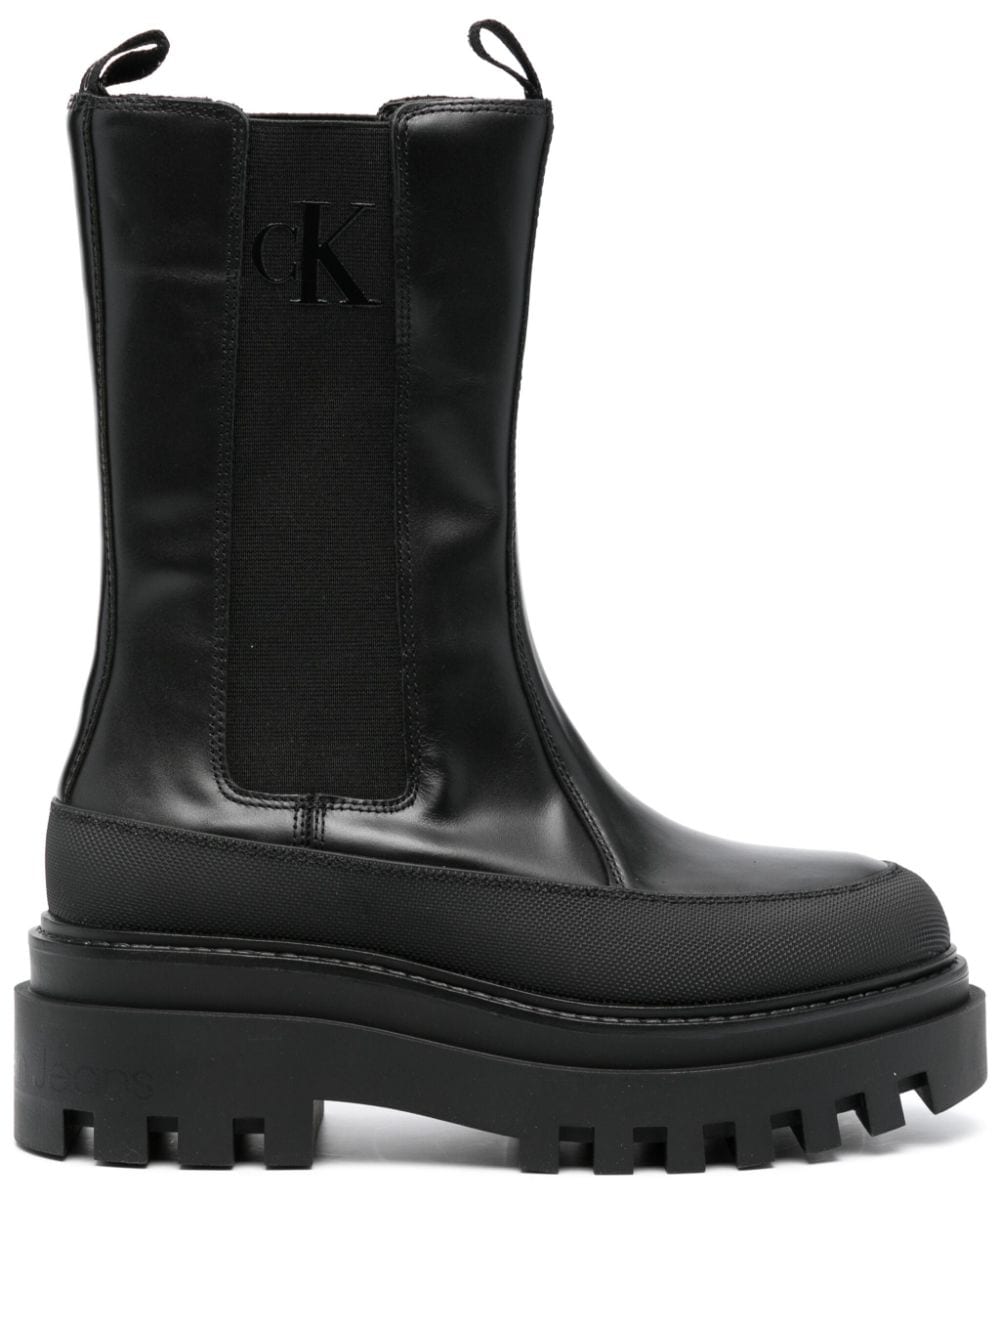 Chelsea flatform leather boots